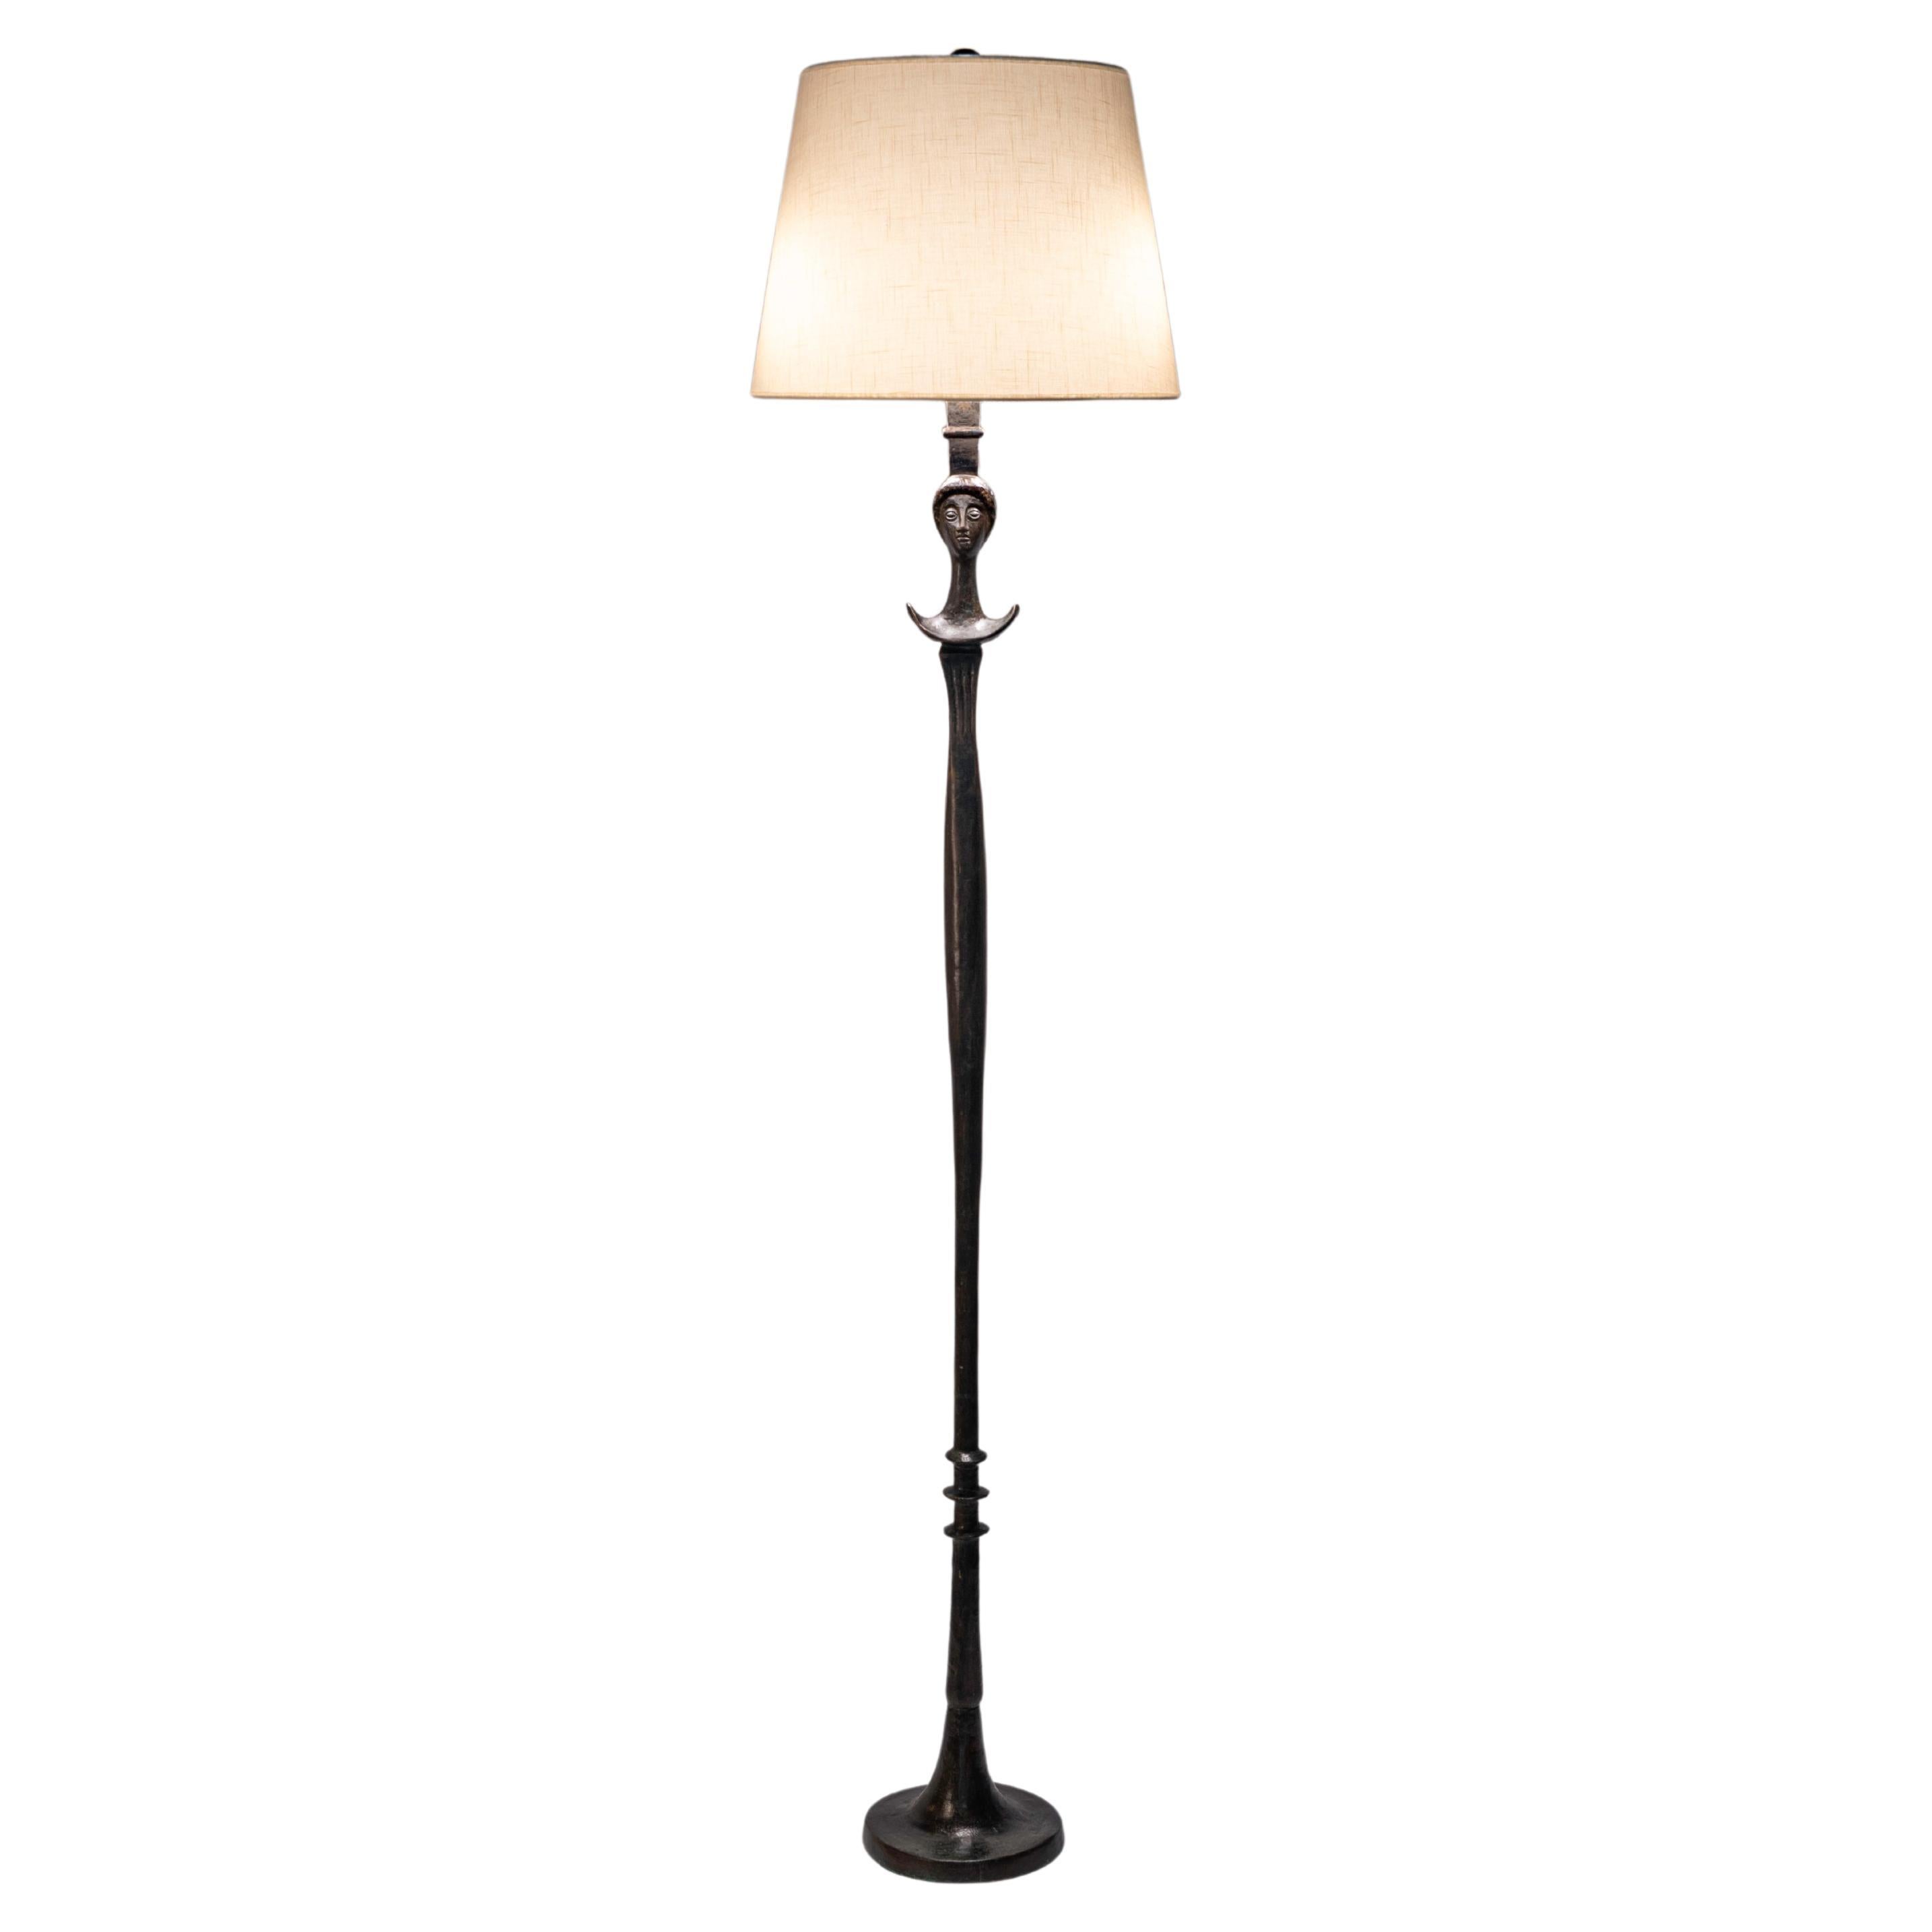 Tete de femme floor lamp in the style of Alberto Giacometti